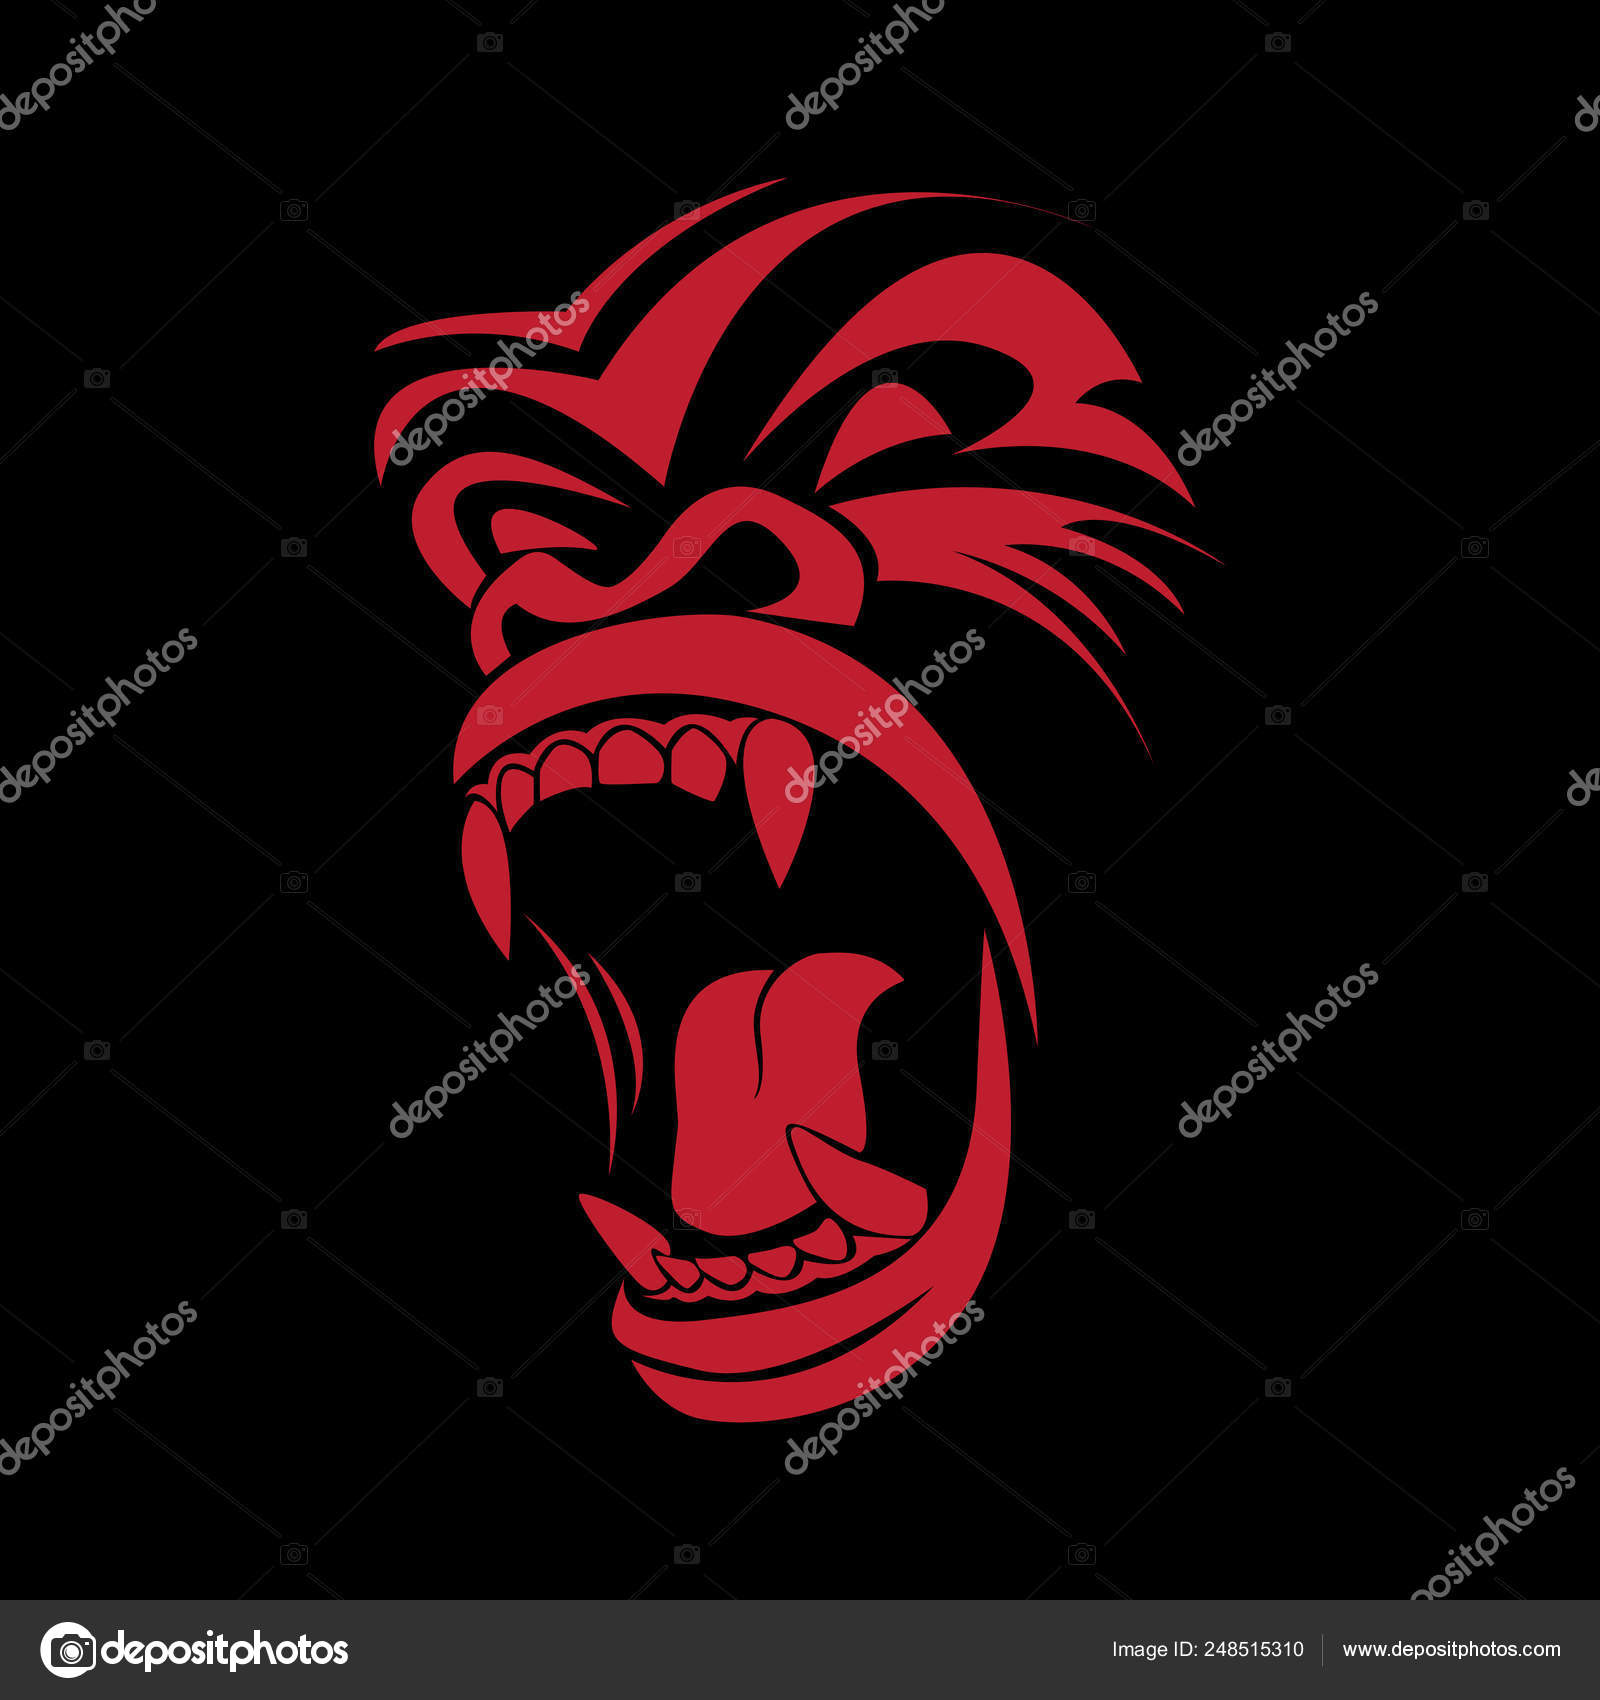 Logotipo de gorilla sports